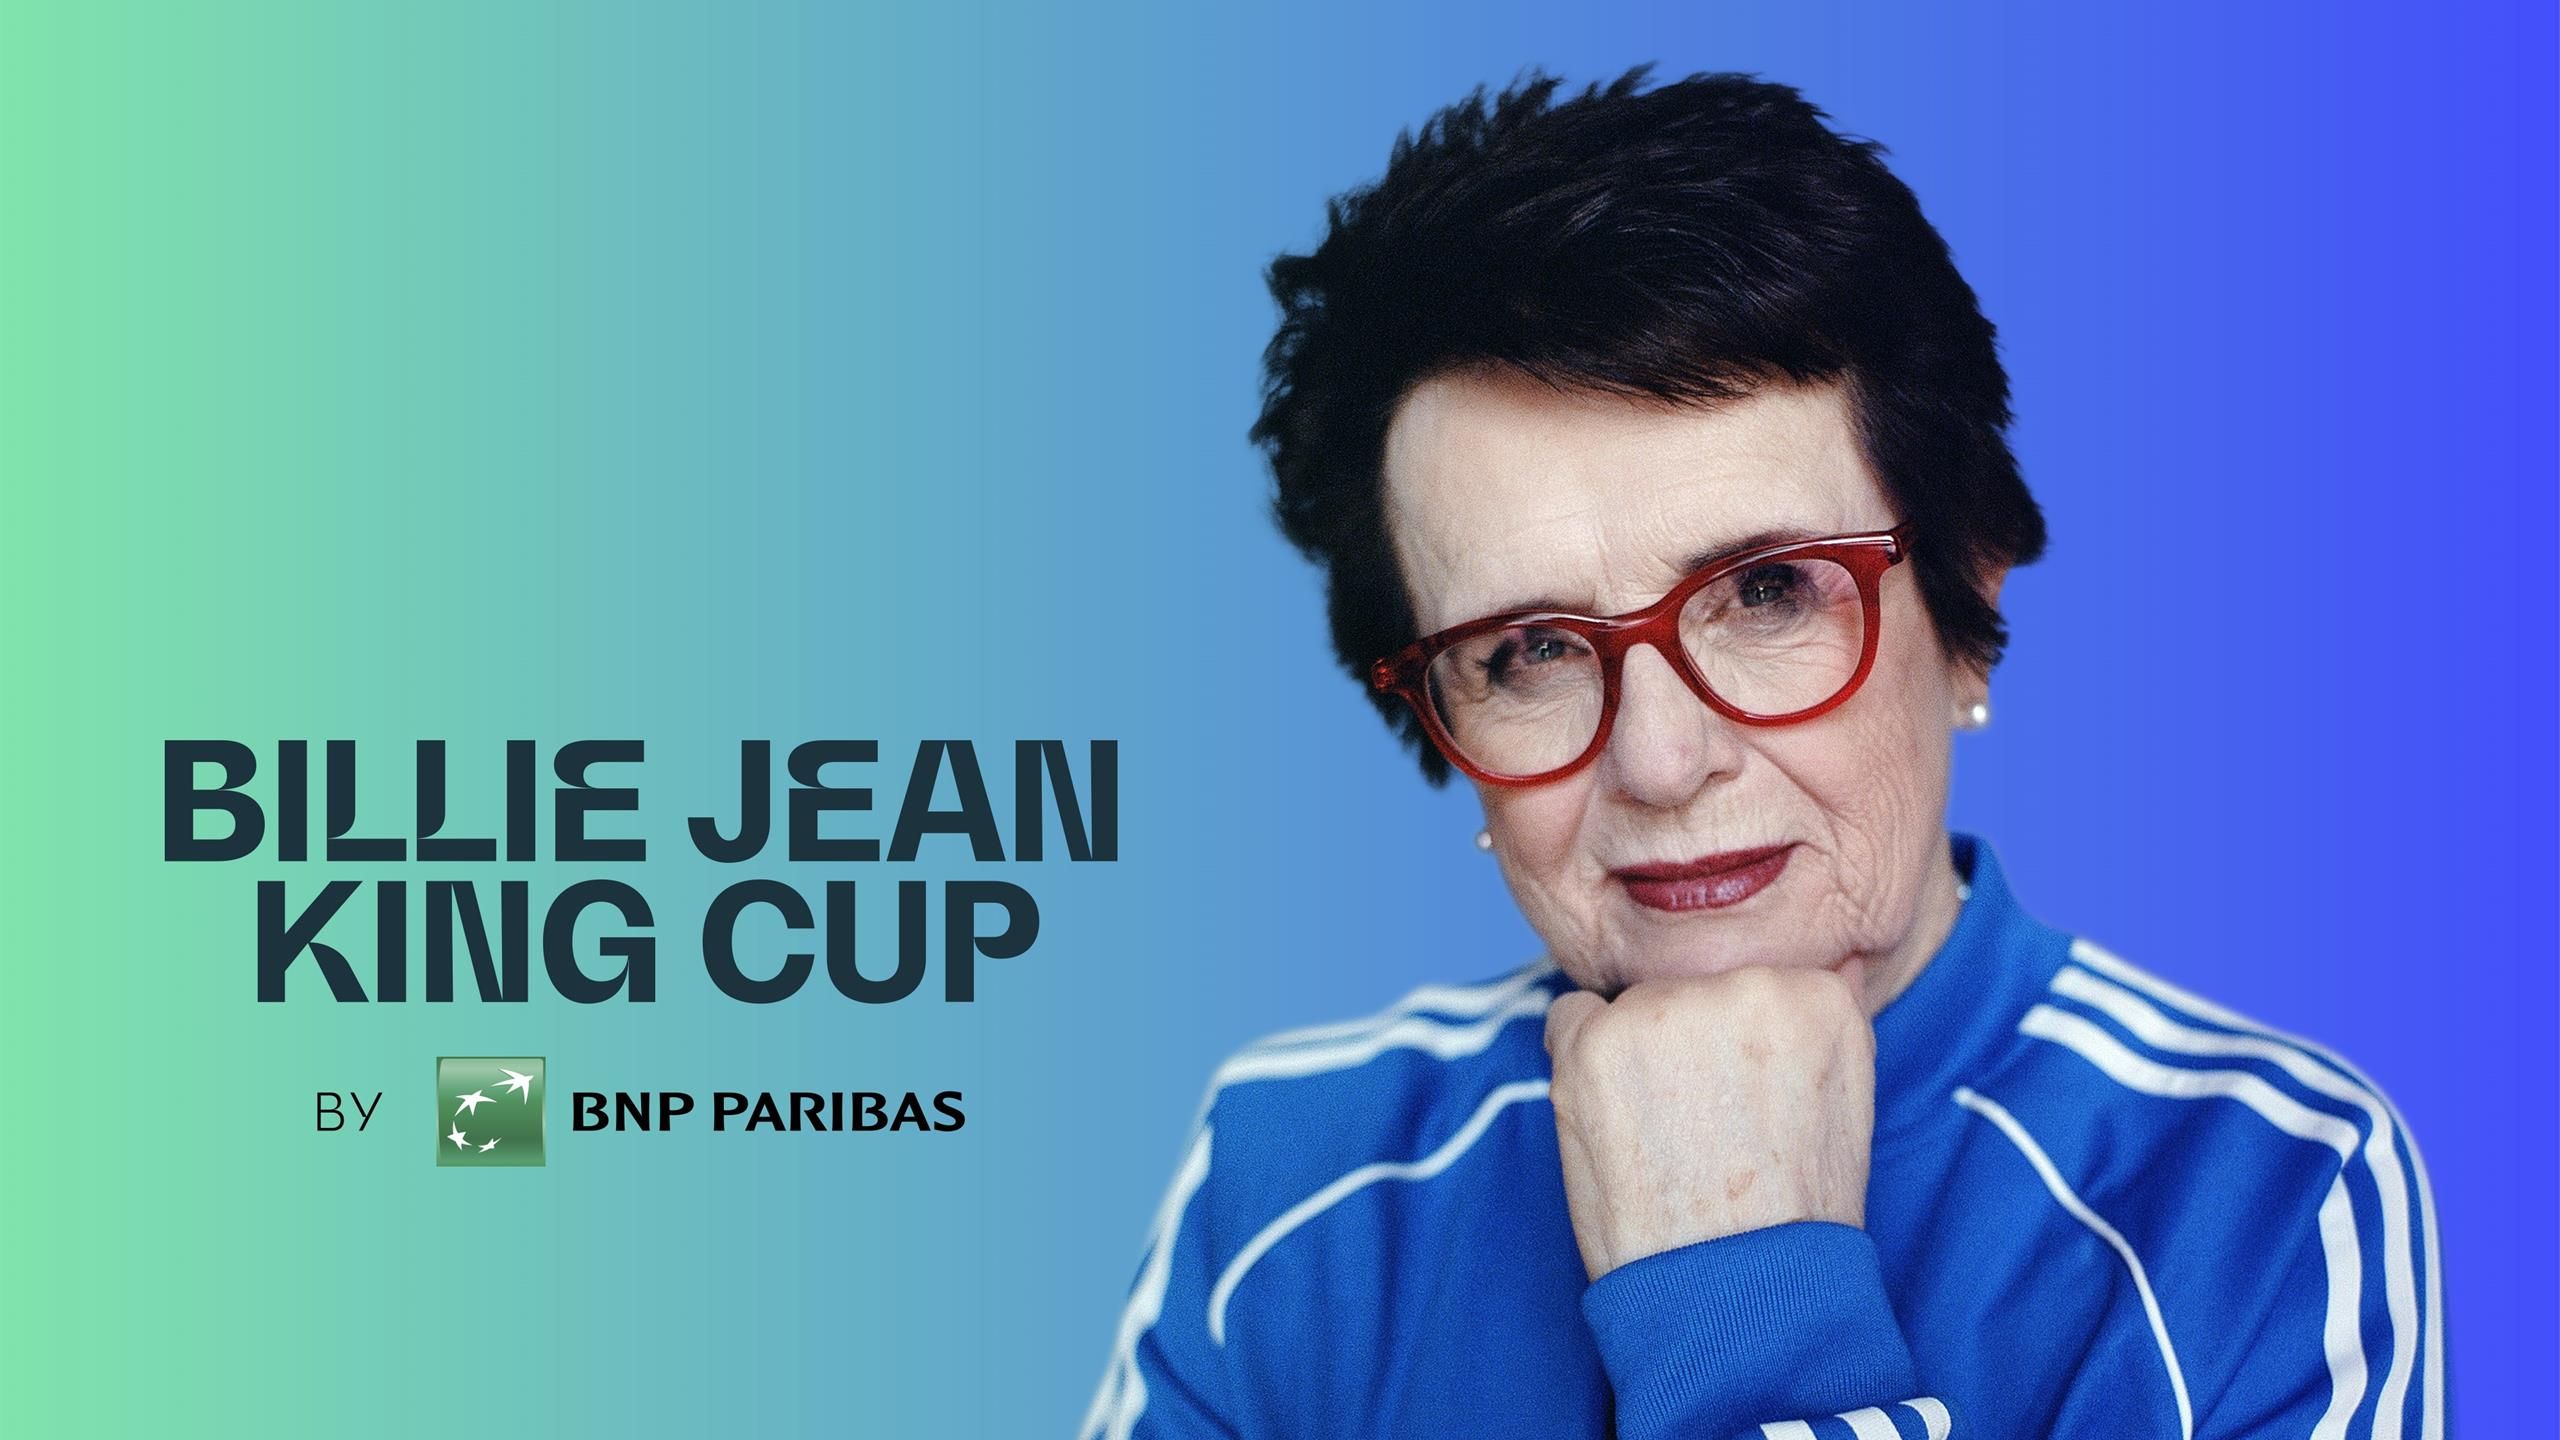 Fed Cup renamed Billie Jean King Cup